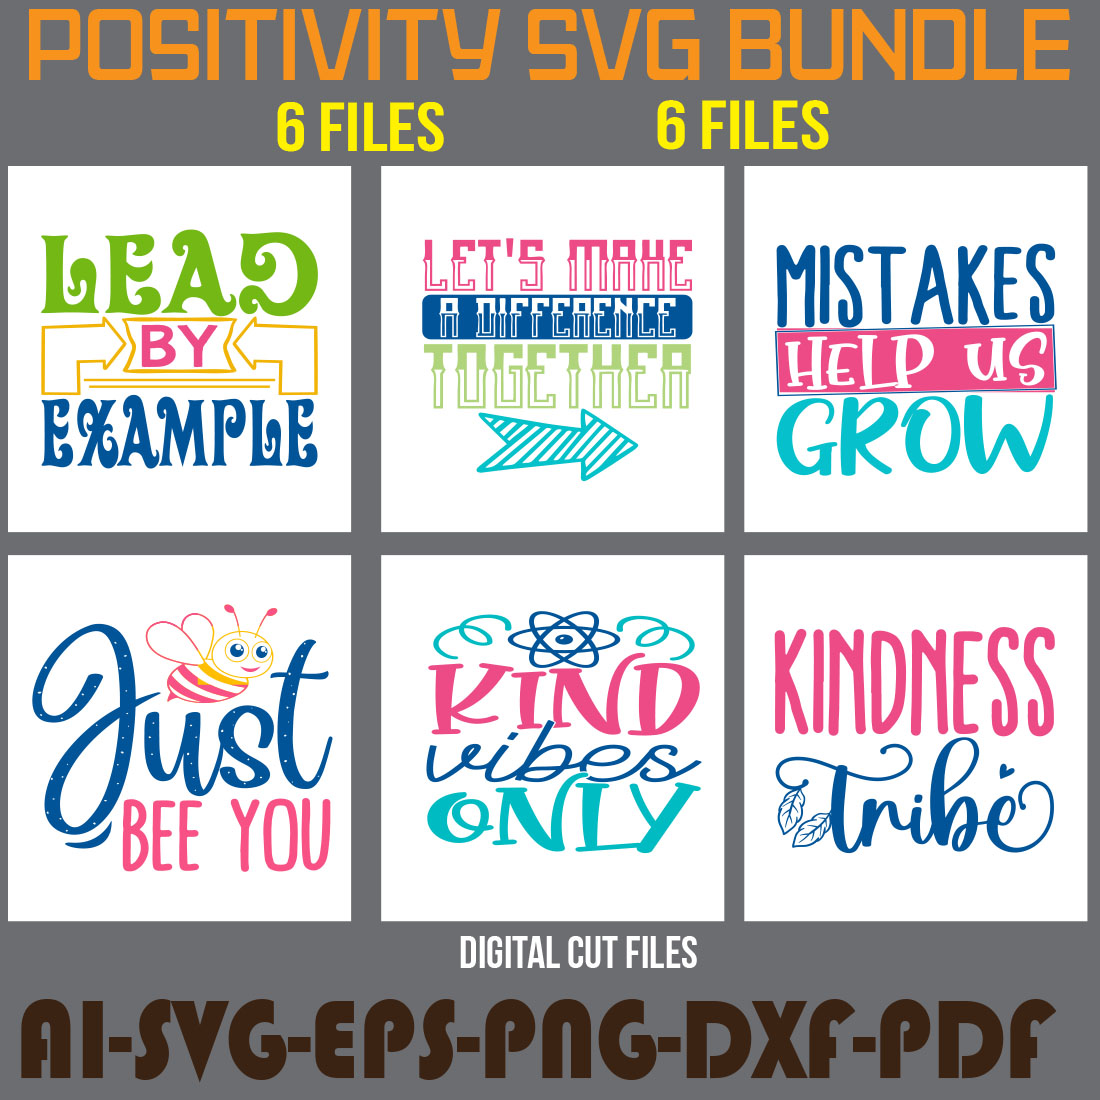 Positivity SVG Bundle cover image.